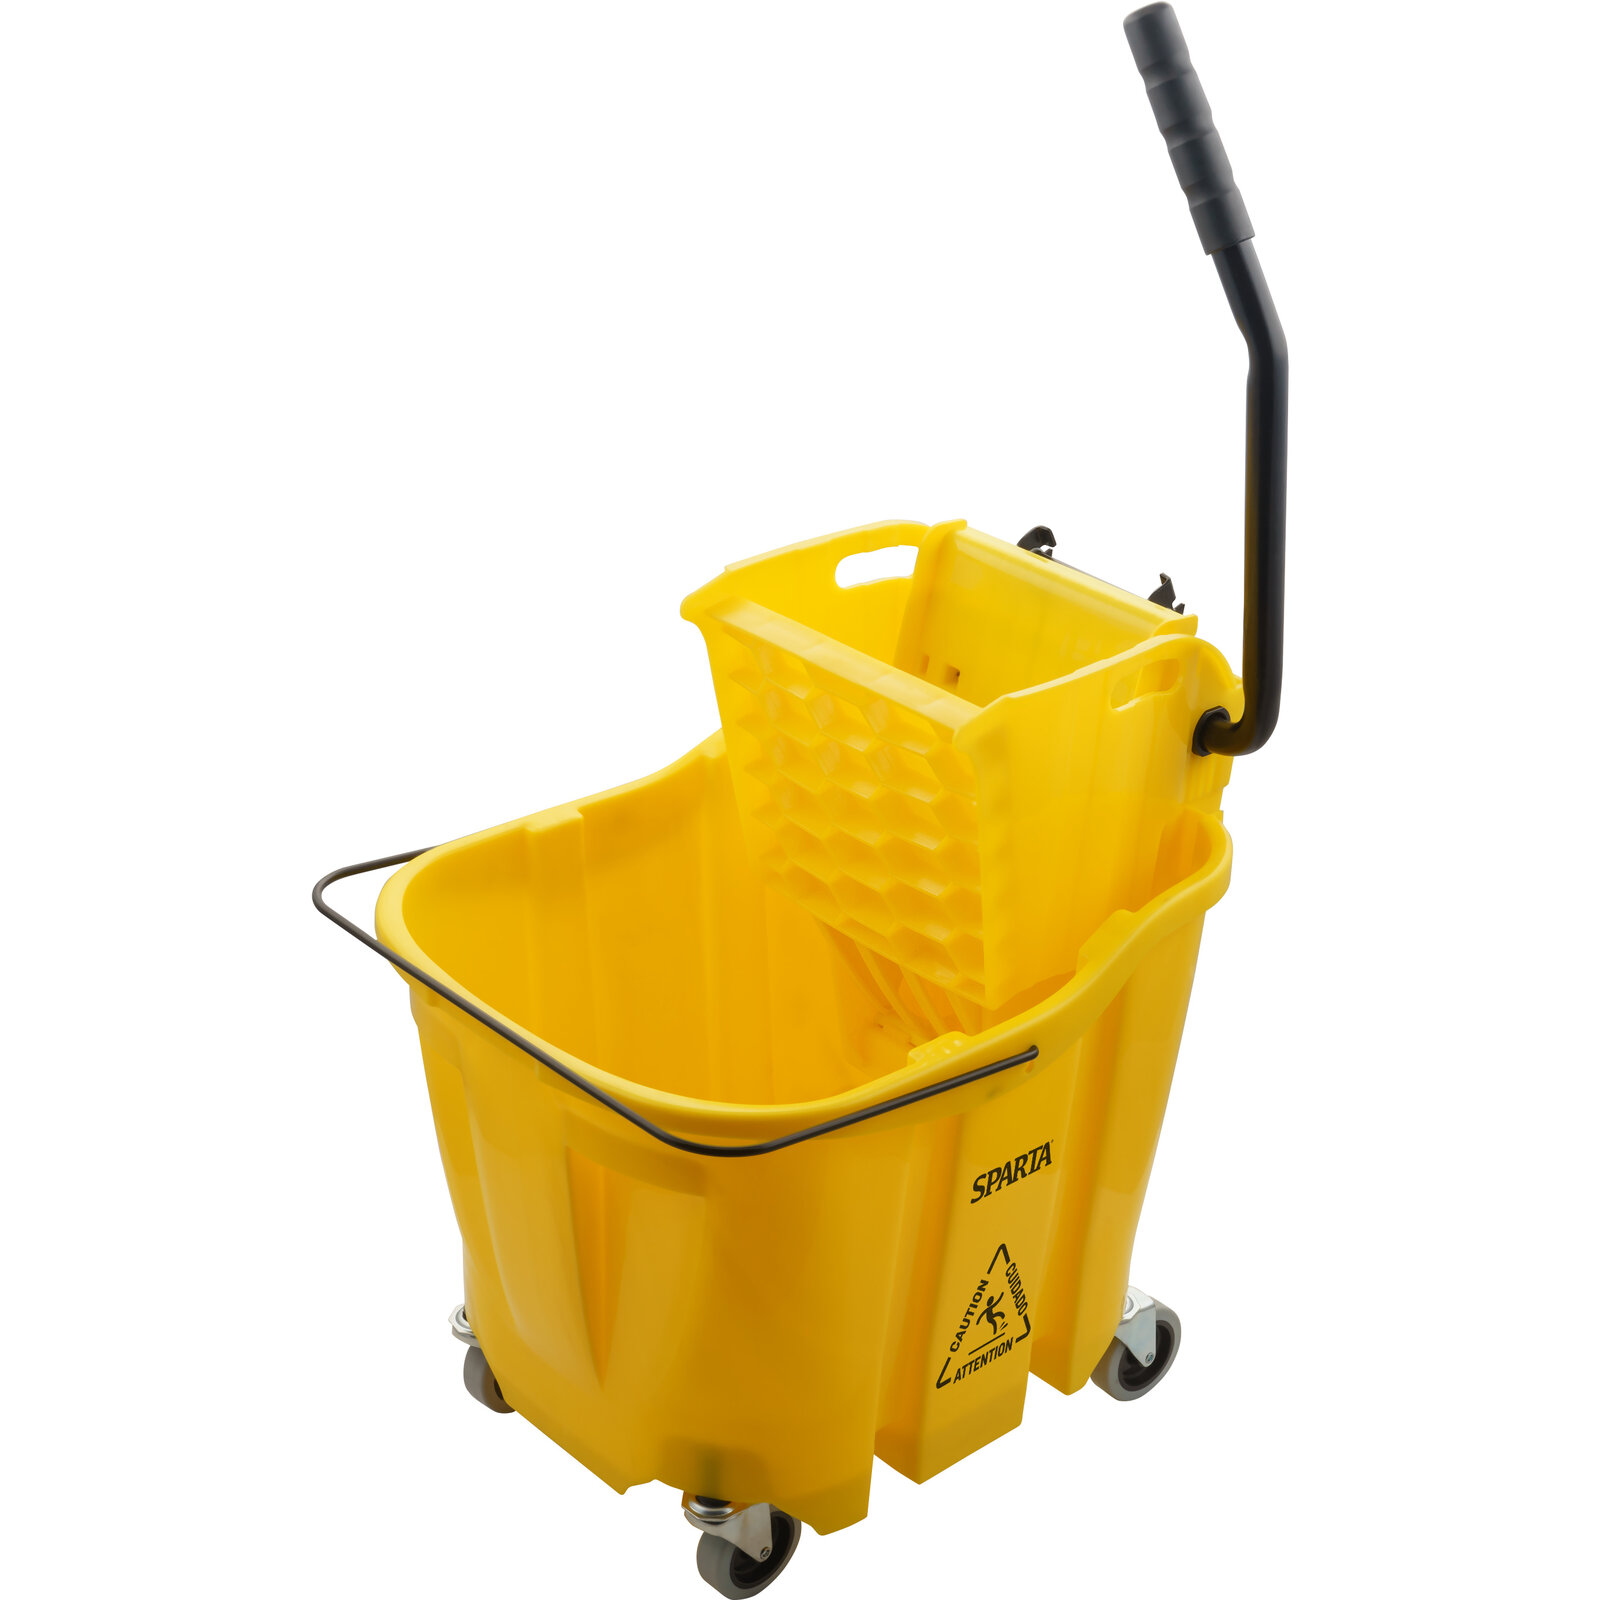 Restaurantware Clean 38 Quart Industrial Mop Bucket, 1 Combo Mop Wringer  Bucket - With Side Press Wringer, Built-In Casters, Yellow Plastic  Commercial